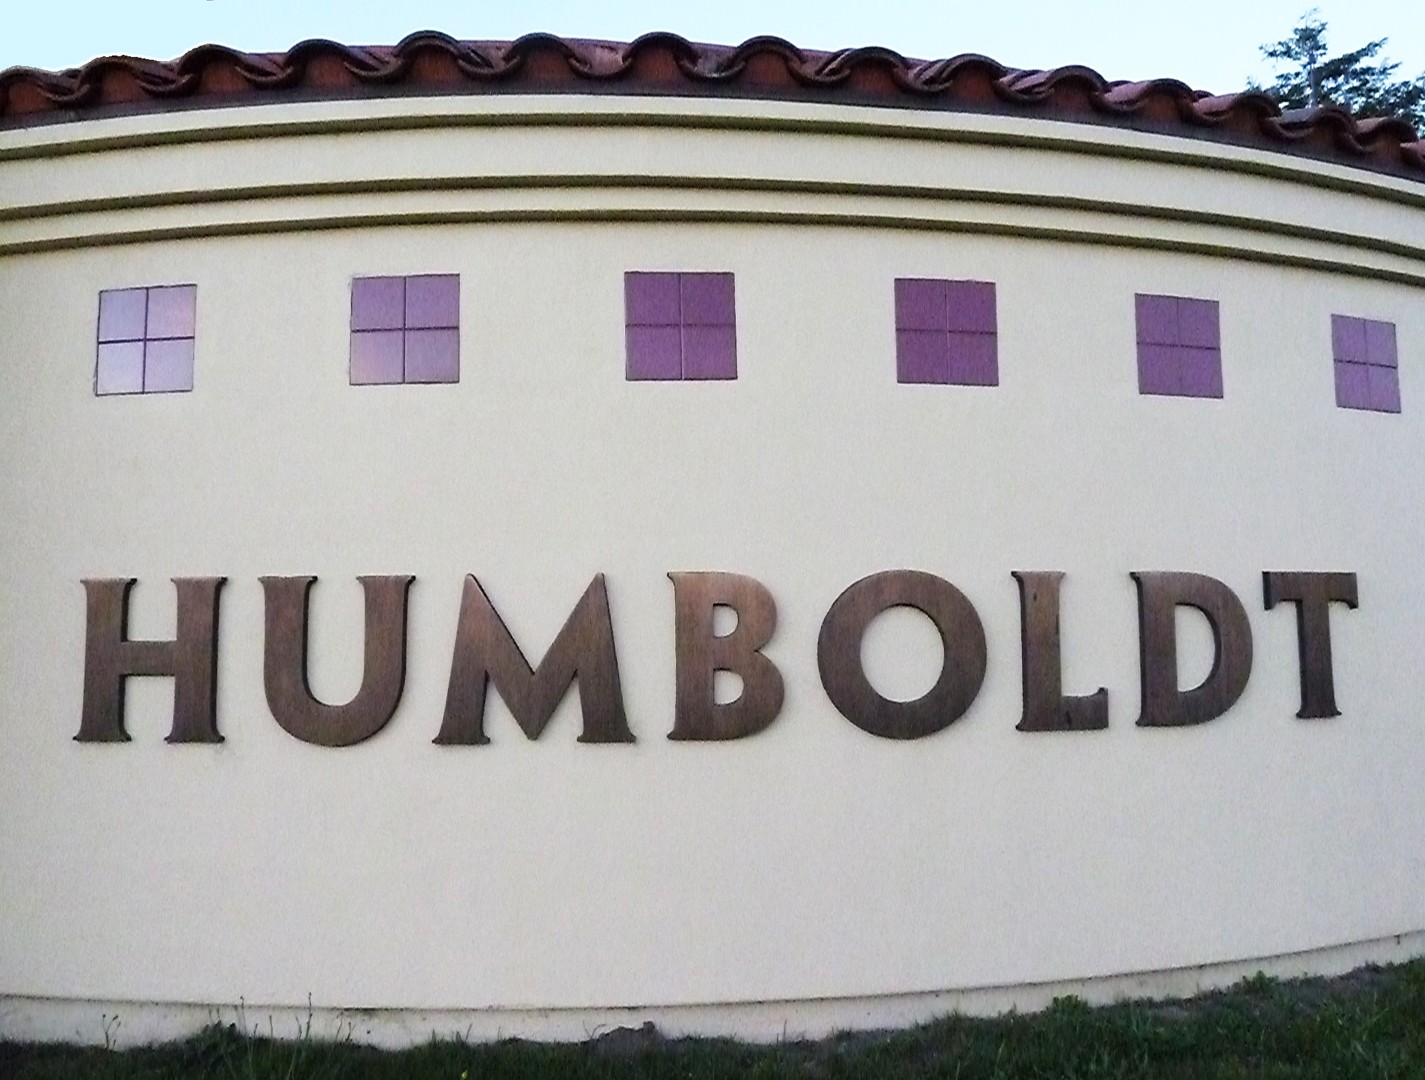 Humboldt - PHOTO BY BOB DORAN